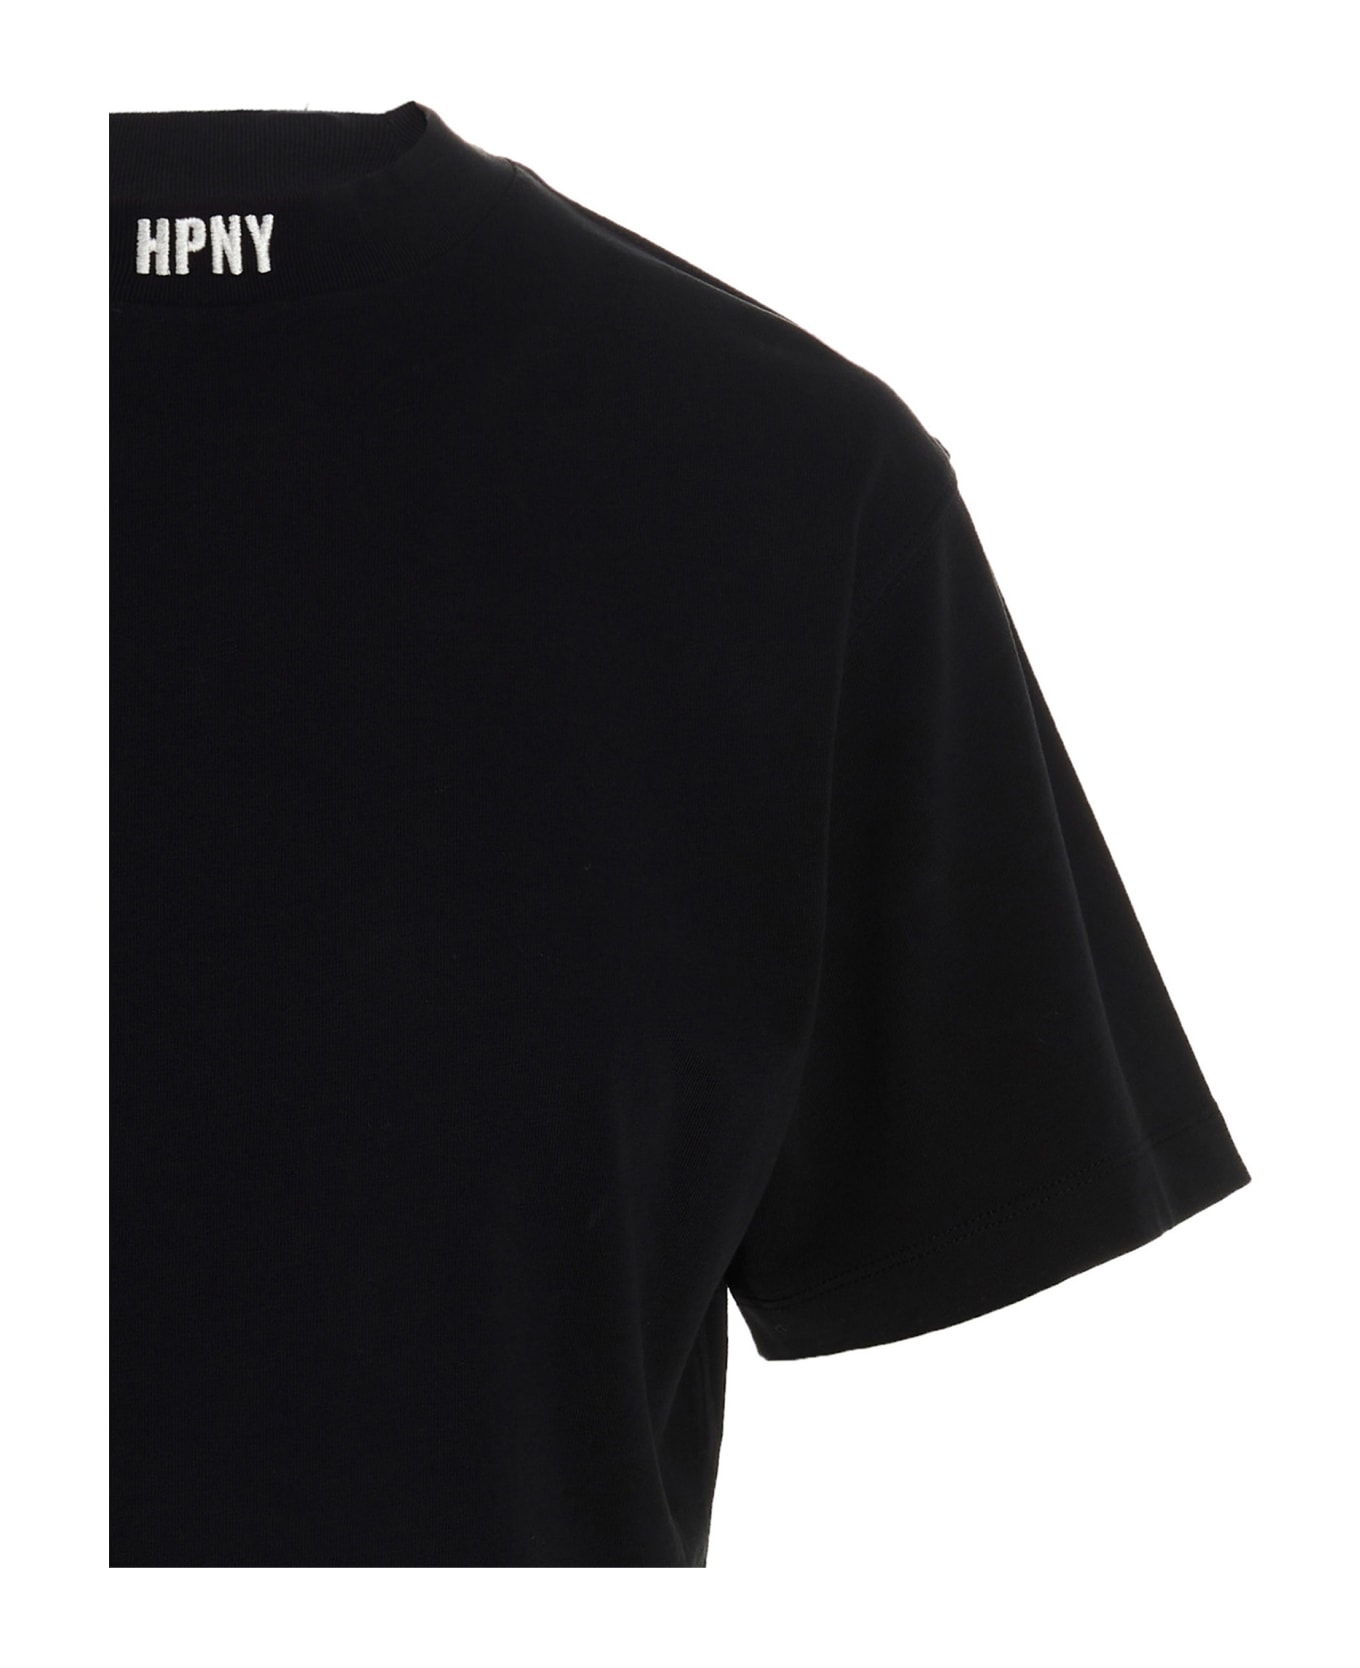 HERON PRESTON 'hpny' Cropped T-shirt - White/Black